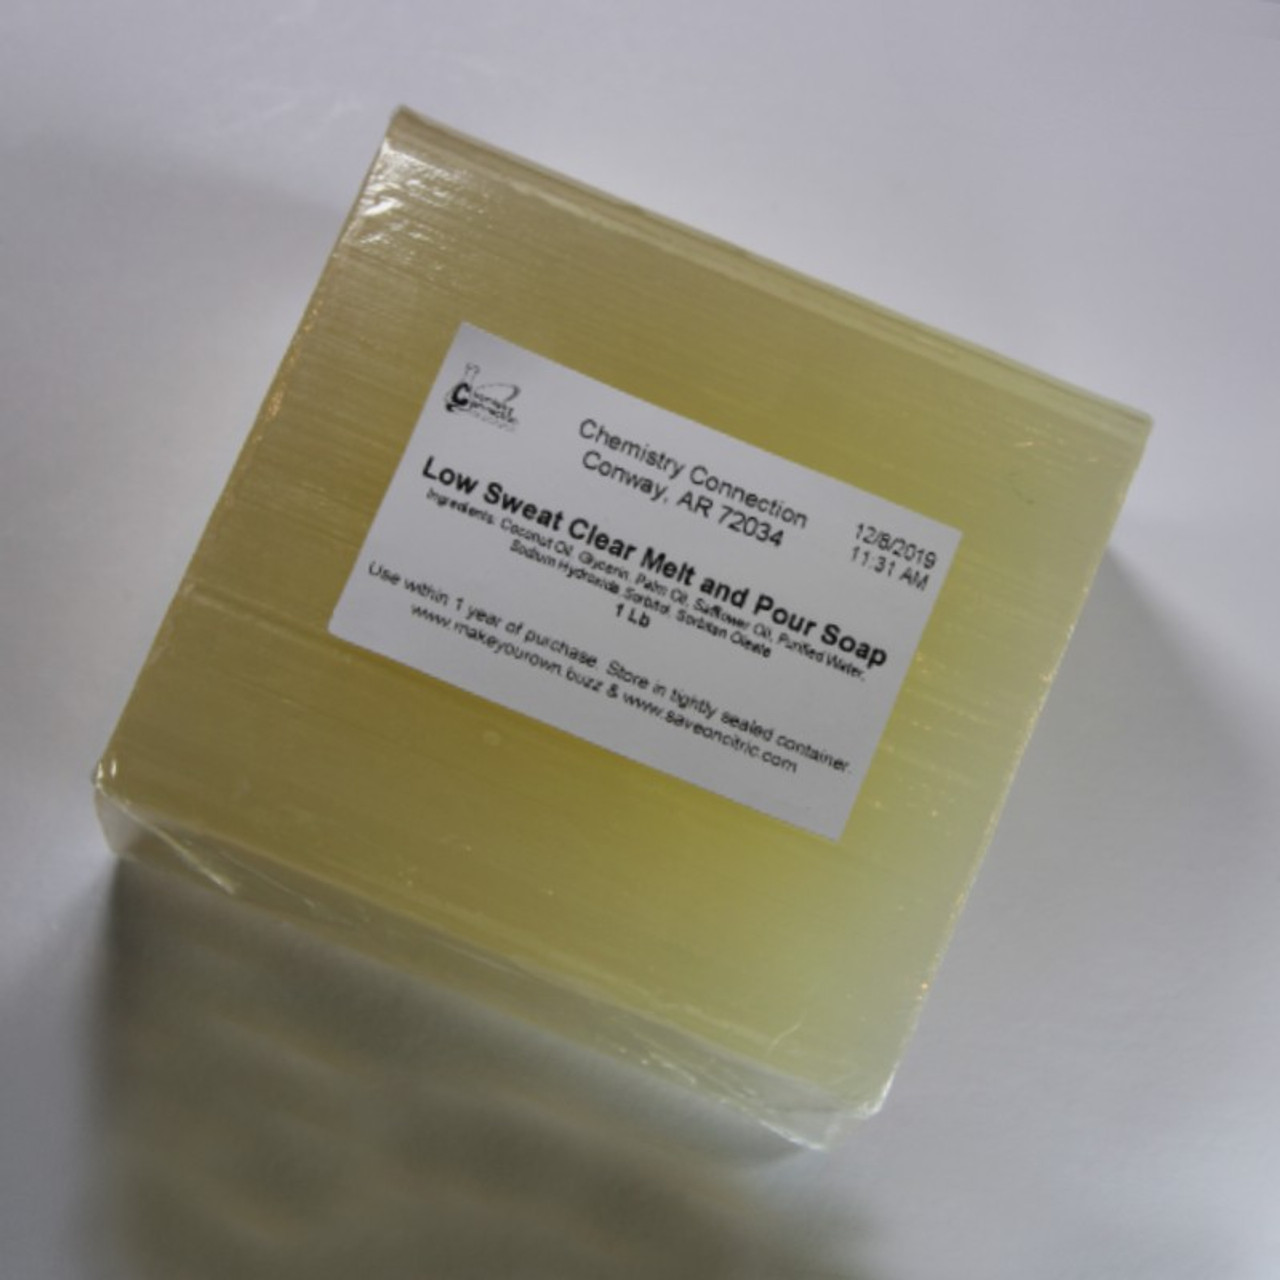 Premium Extra Clear MP Soap Base - 2 lb Tray - Wholesale Supplies Plus